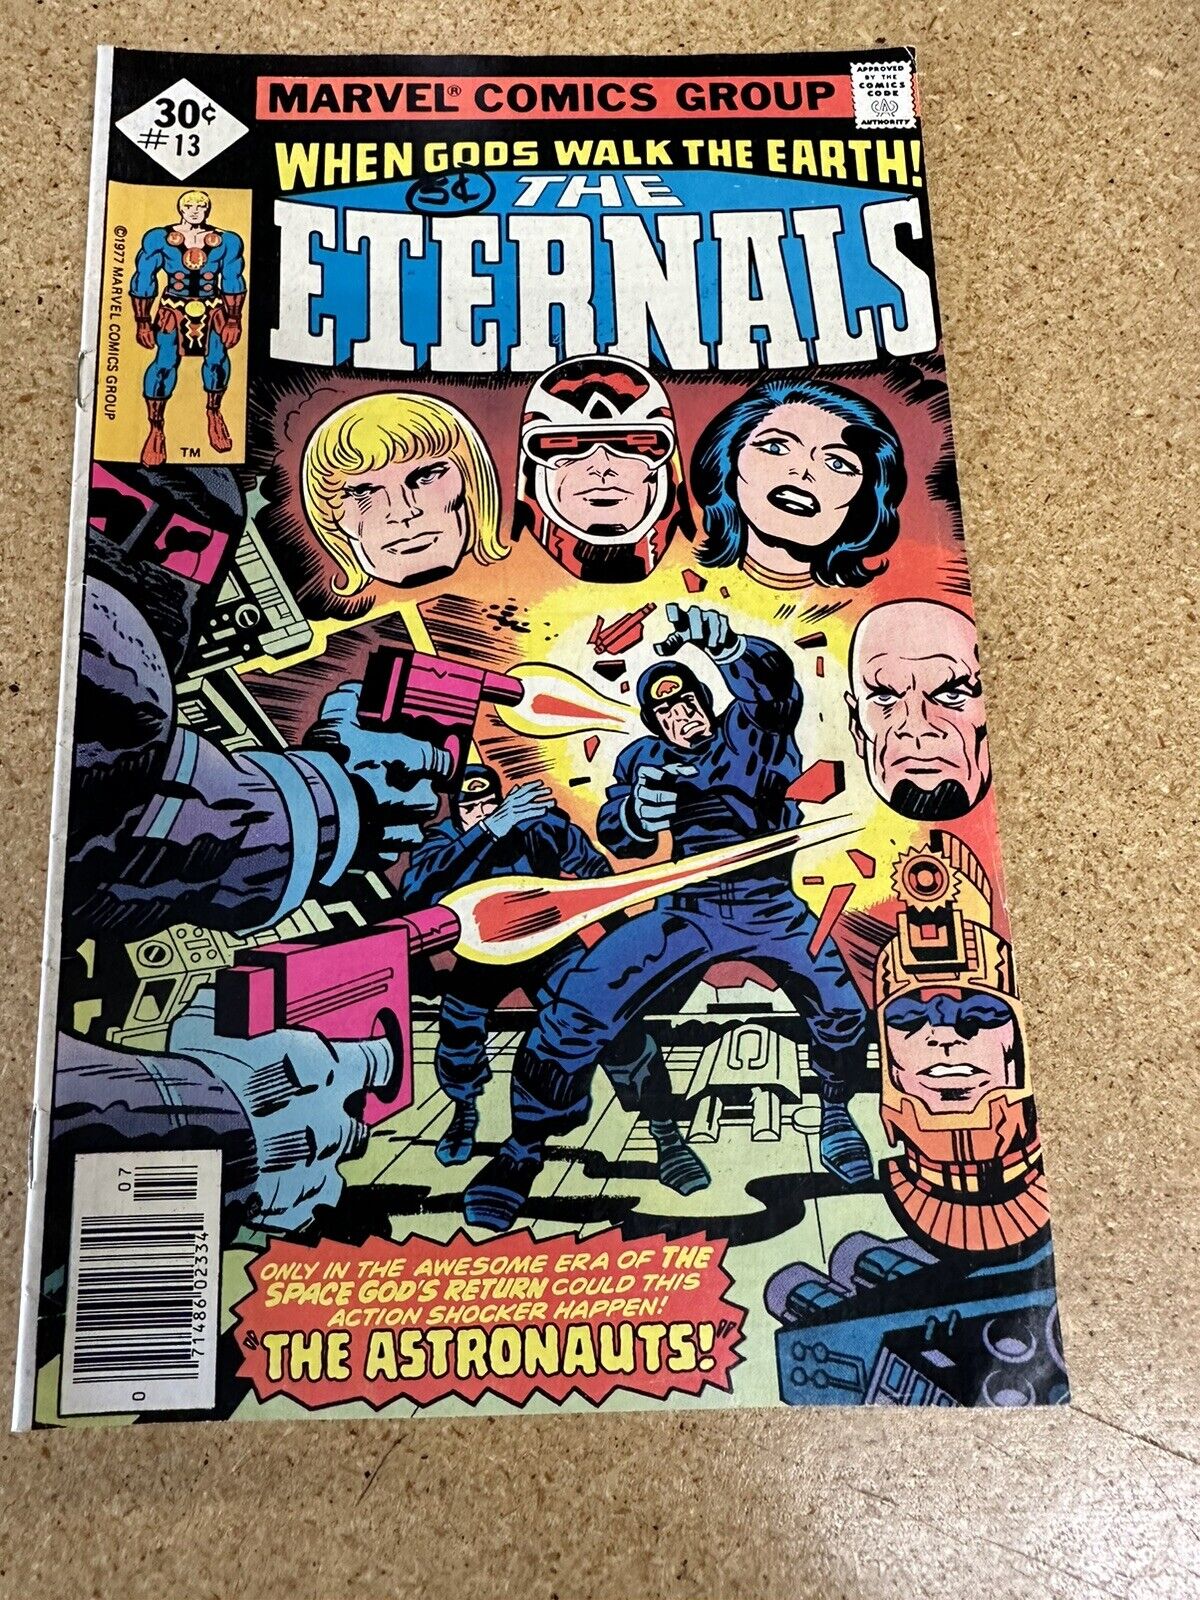 Vintage Marvel Comics The Eternals No. 13 July 1977 Comic Book